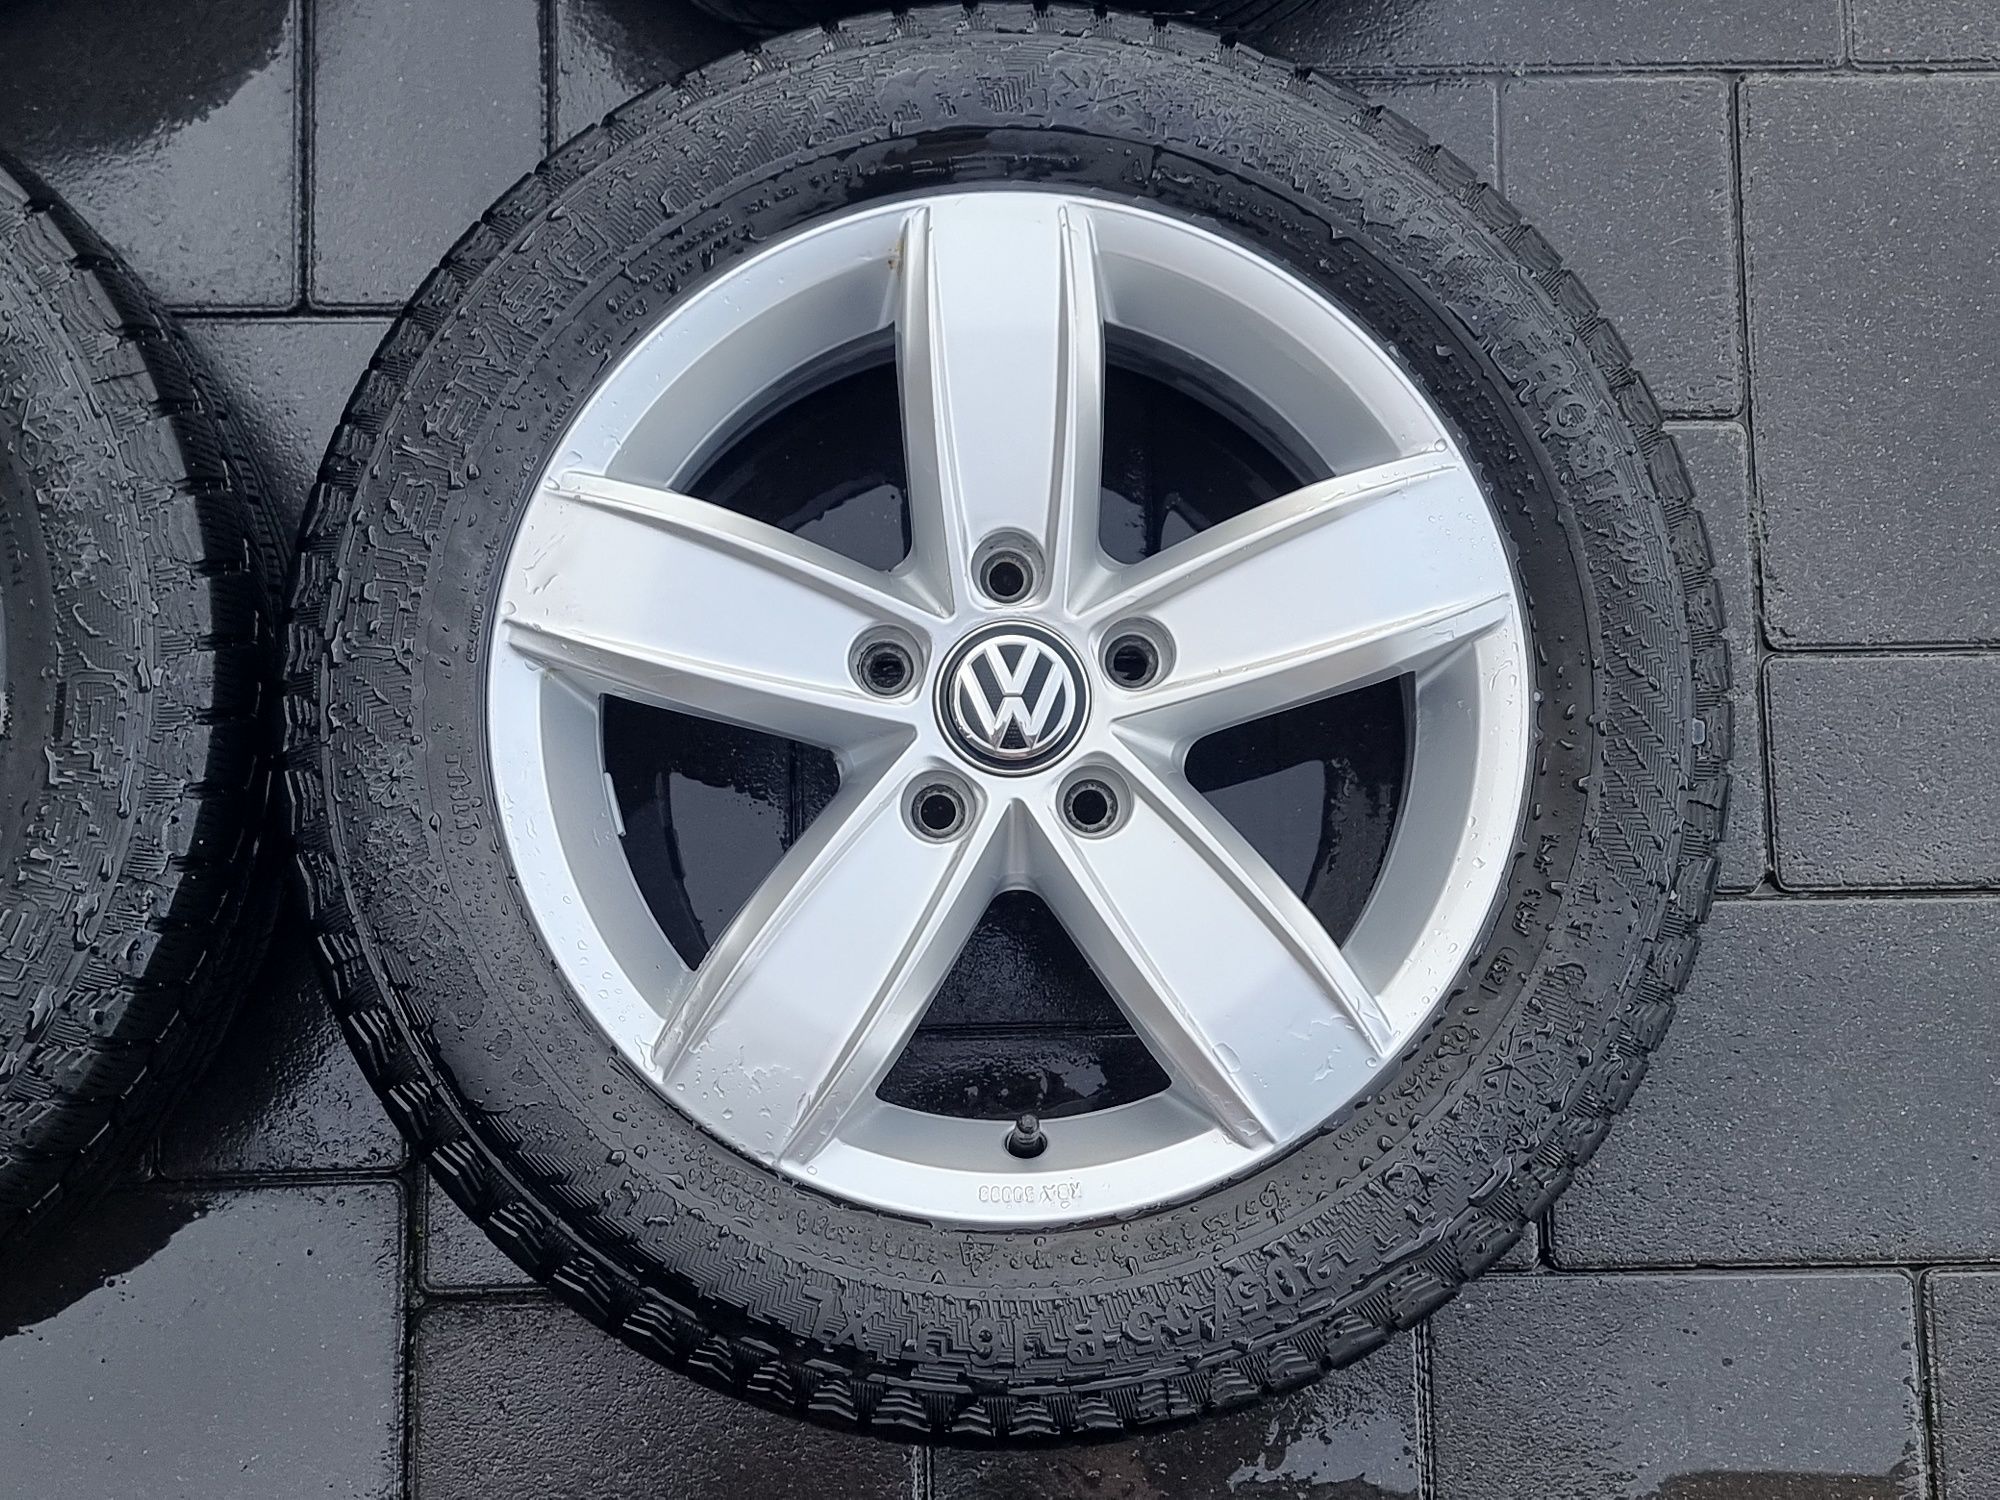 Титанові диски 5×112 R16 Volkswagen , Skoda,  зима 205 55 16